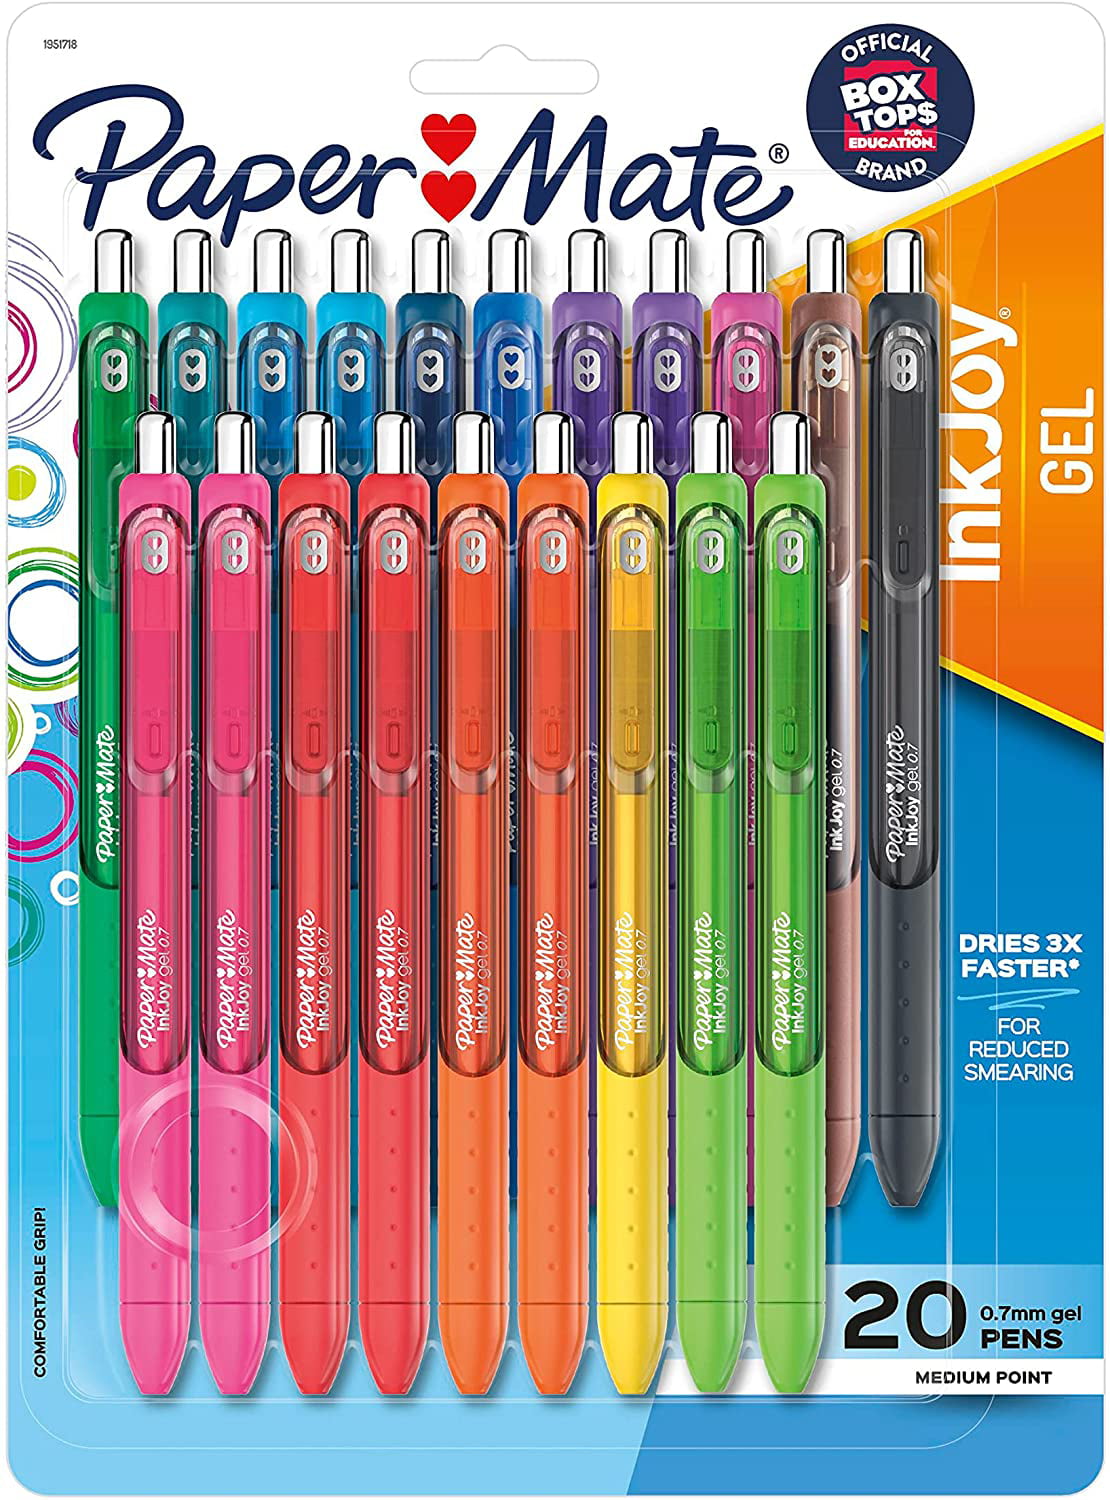 20 Count Black Assorted Colors 1951718 & InkJoy Gel Pens Medium Point 6 Count Medium Point Paper Mate InkJoy Gel Pens 